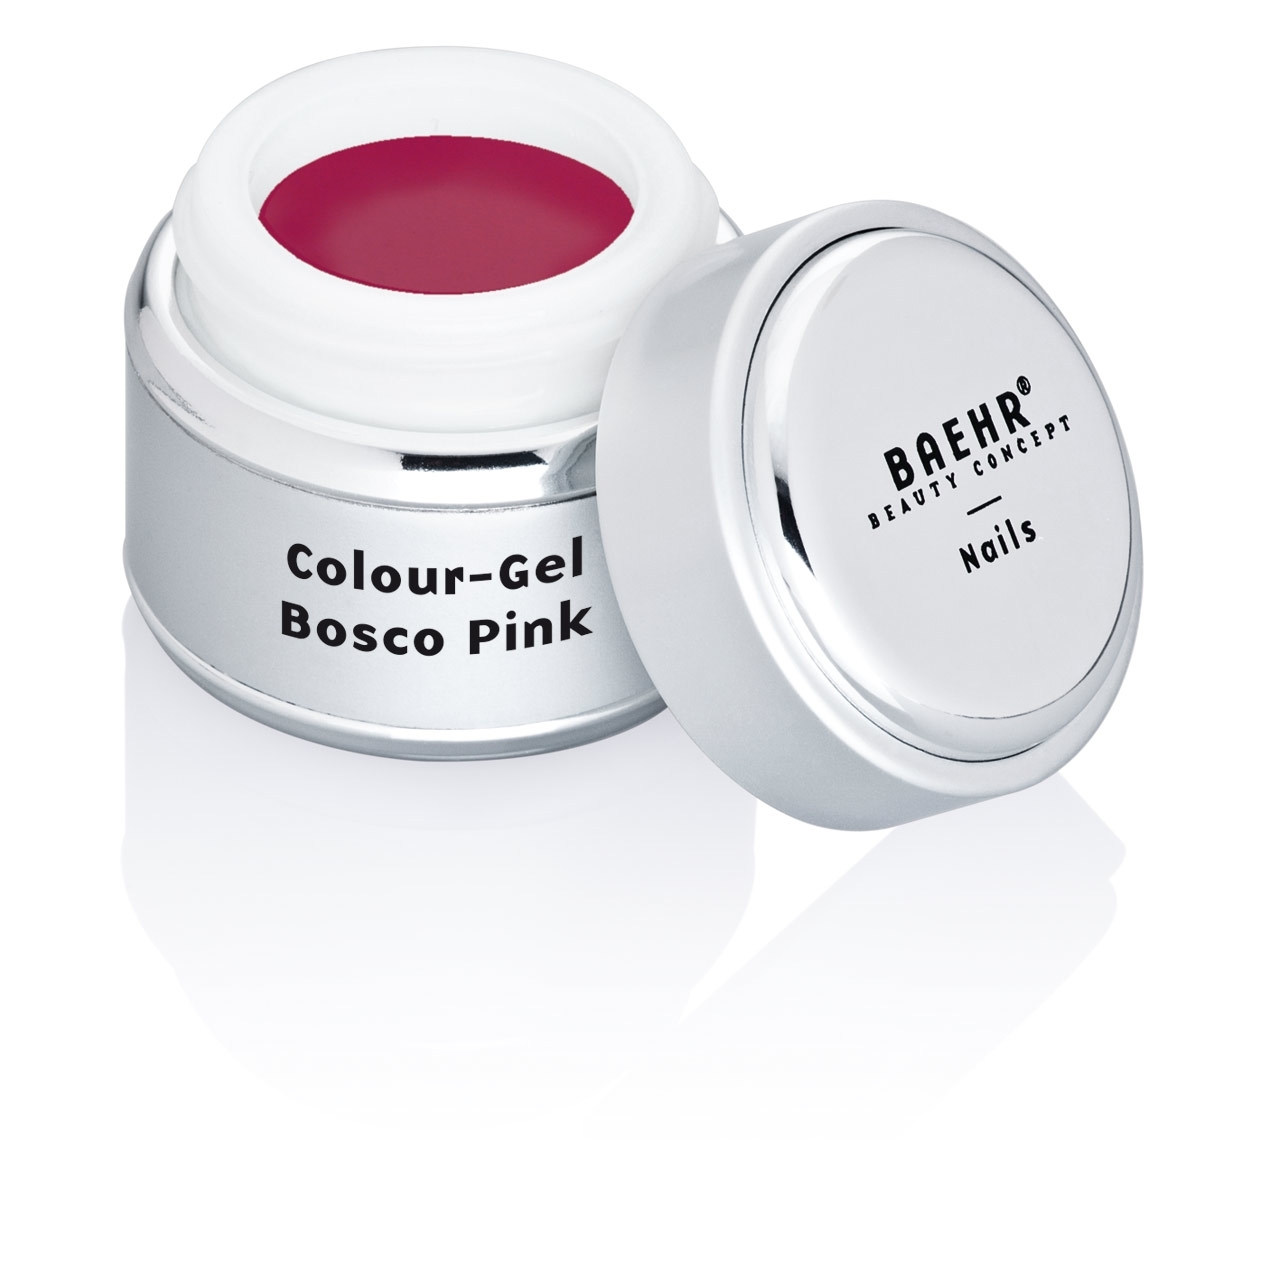 BAEHR BEAUTY CONCEPT - NAILS Colour-Gel Bosco Pink 5 ml